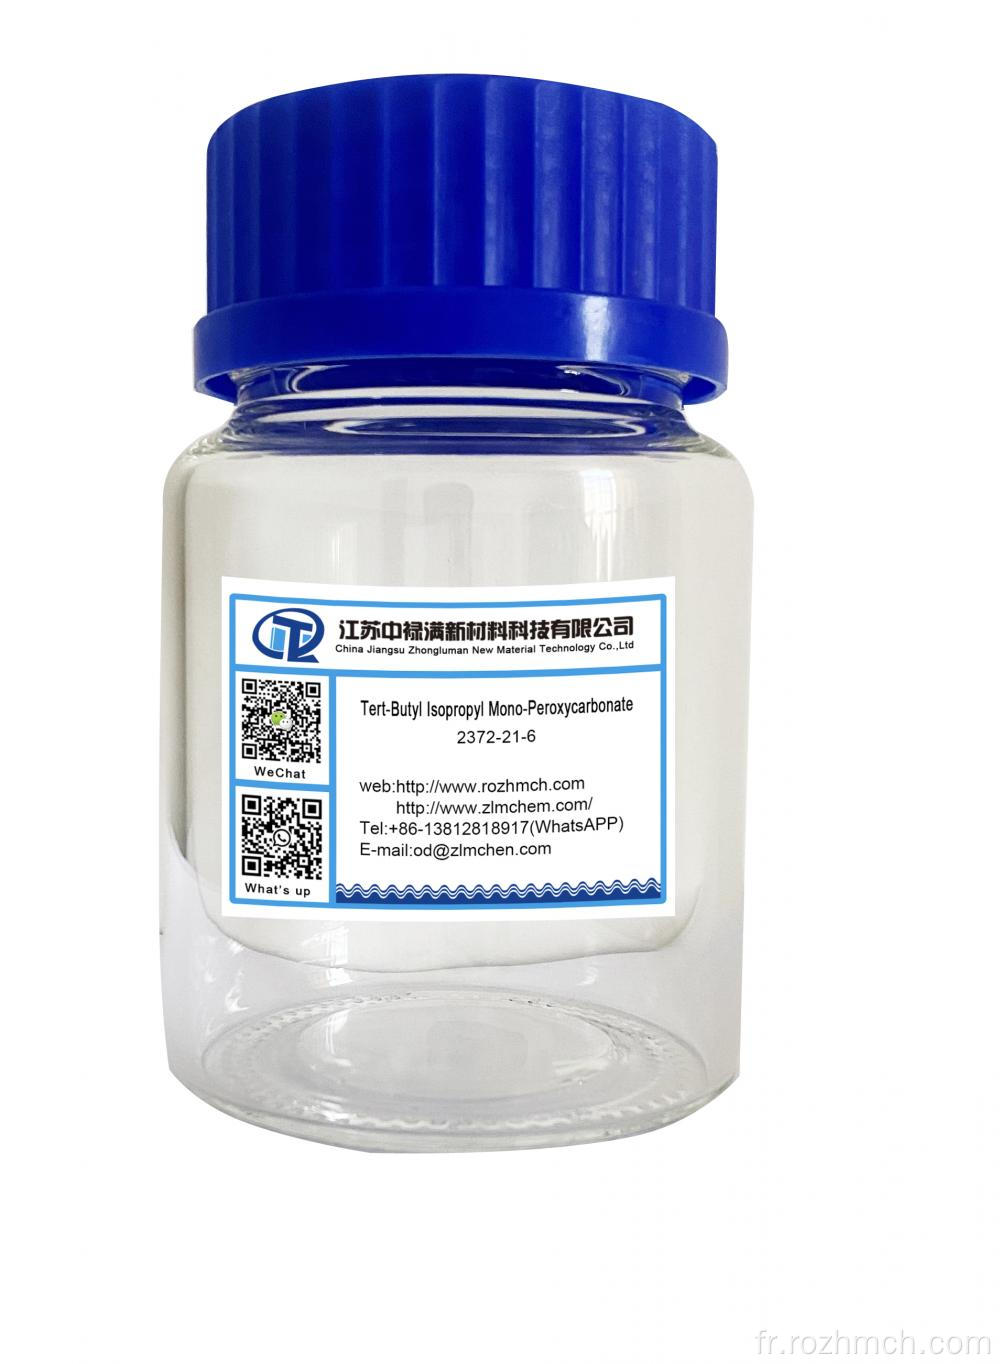 TERT BULYL ISOPROPYL mono-peroxycarbonate